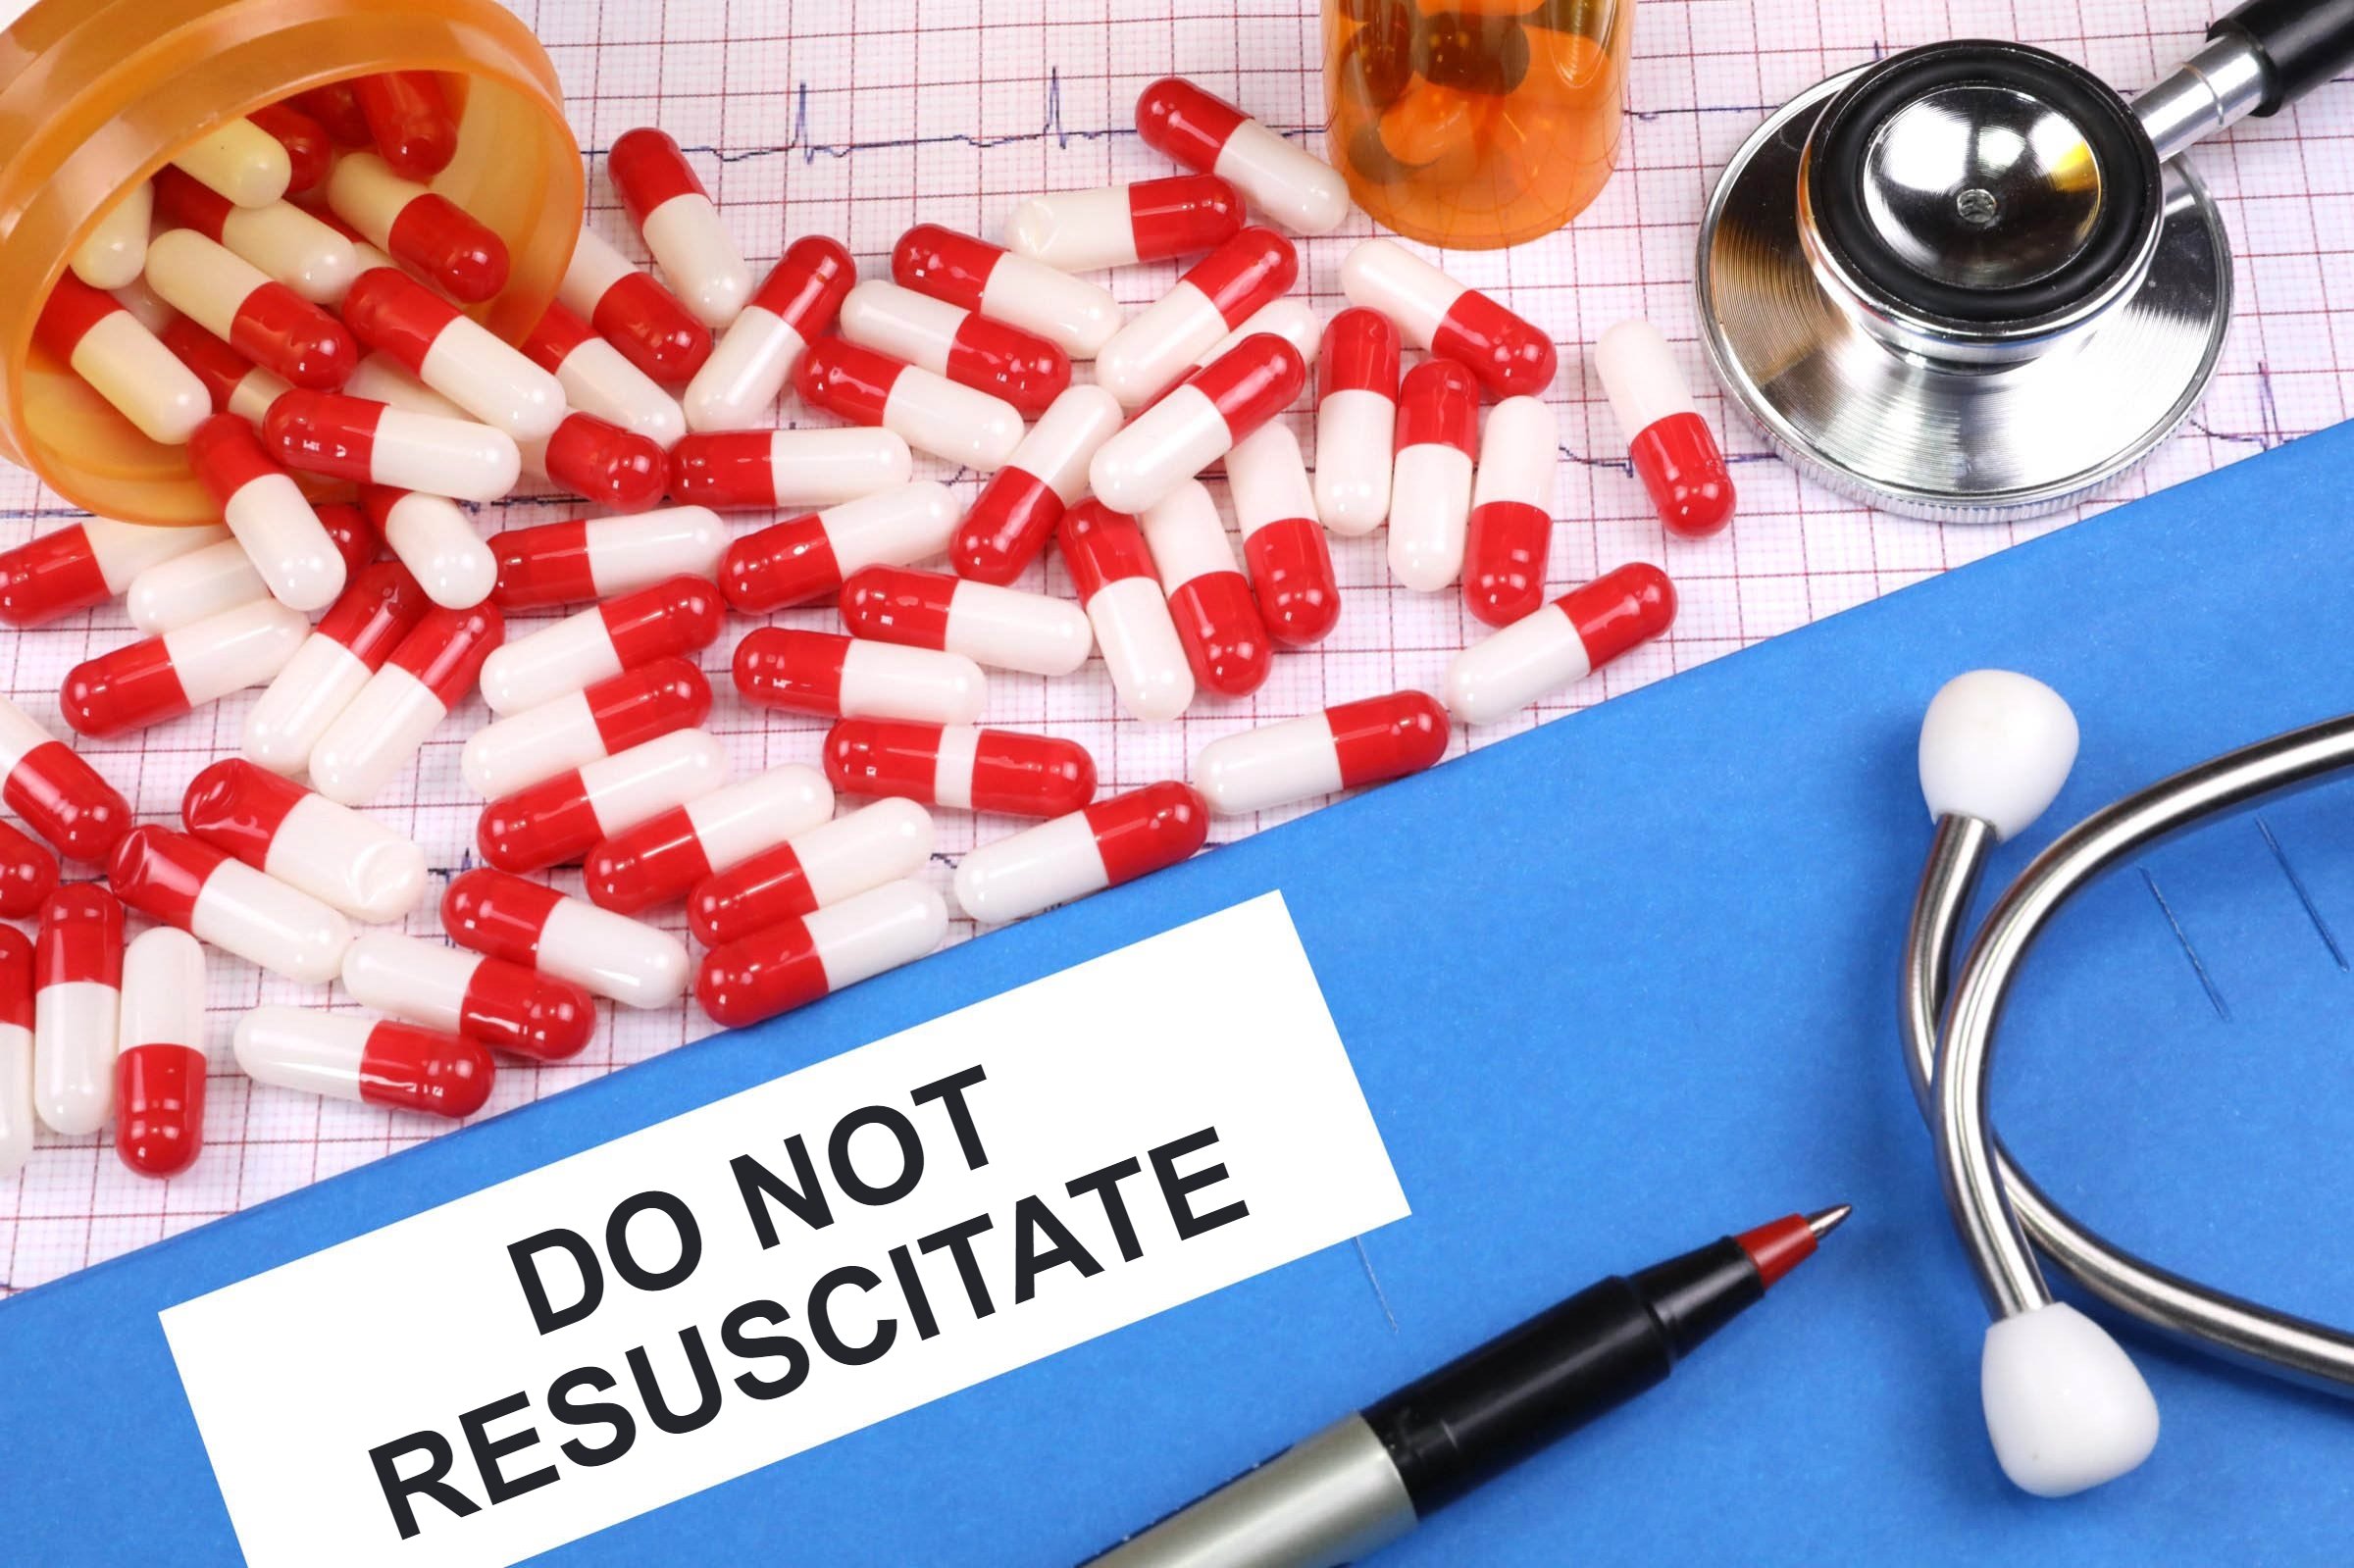 do not resuscitate